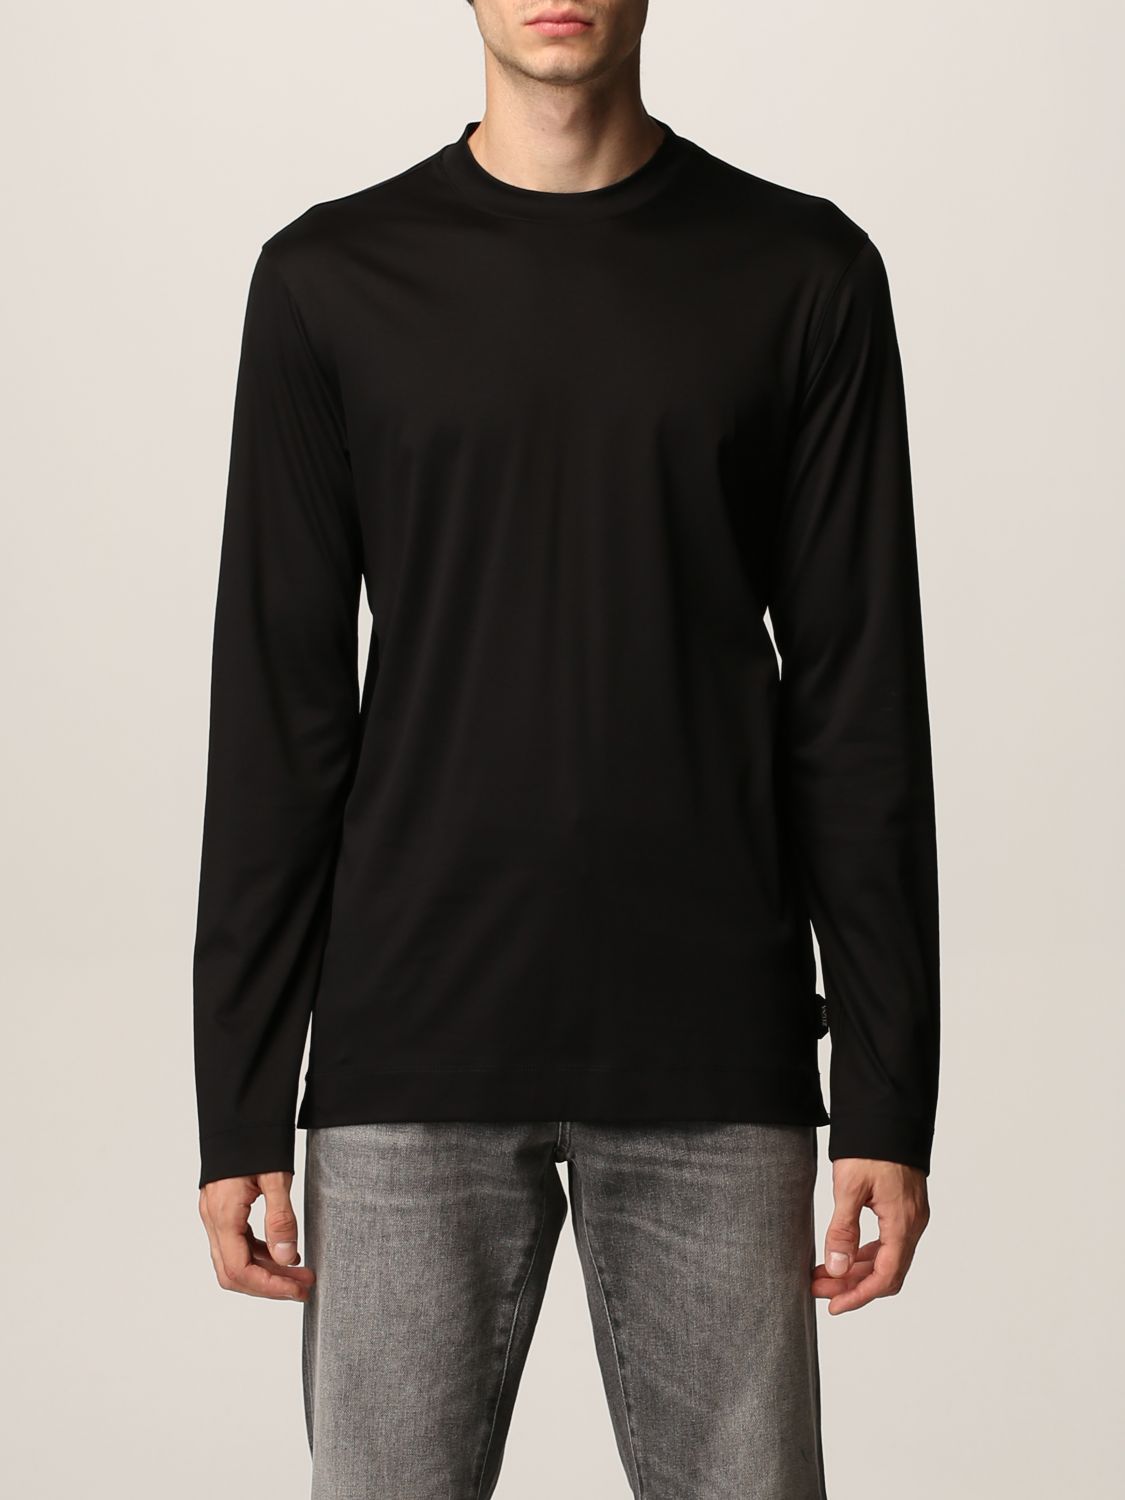 Z ZEGNA: t-shirt for man - Black | Z Zegna t-shirt ZZ642 VY348 online ...